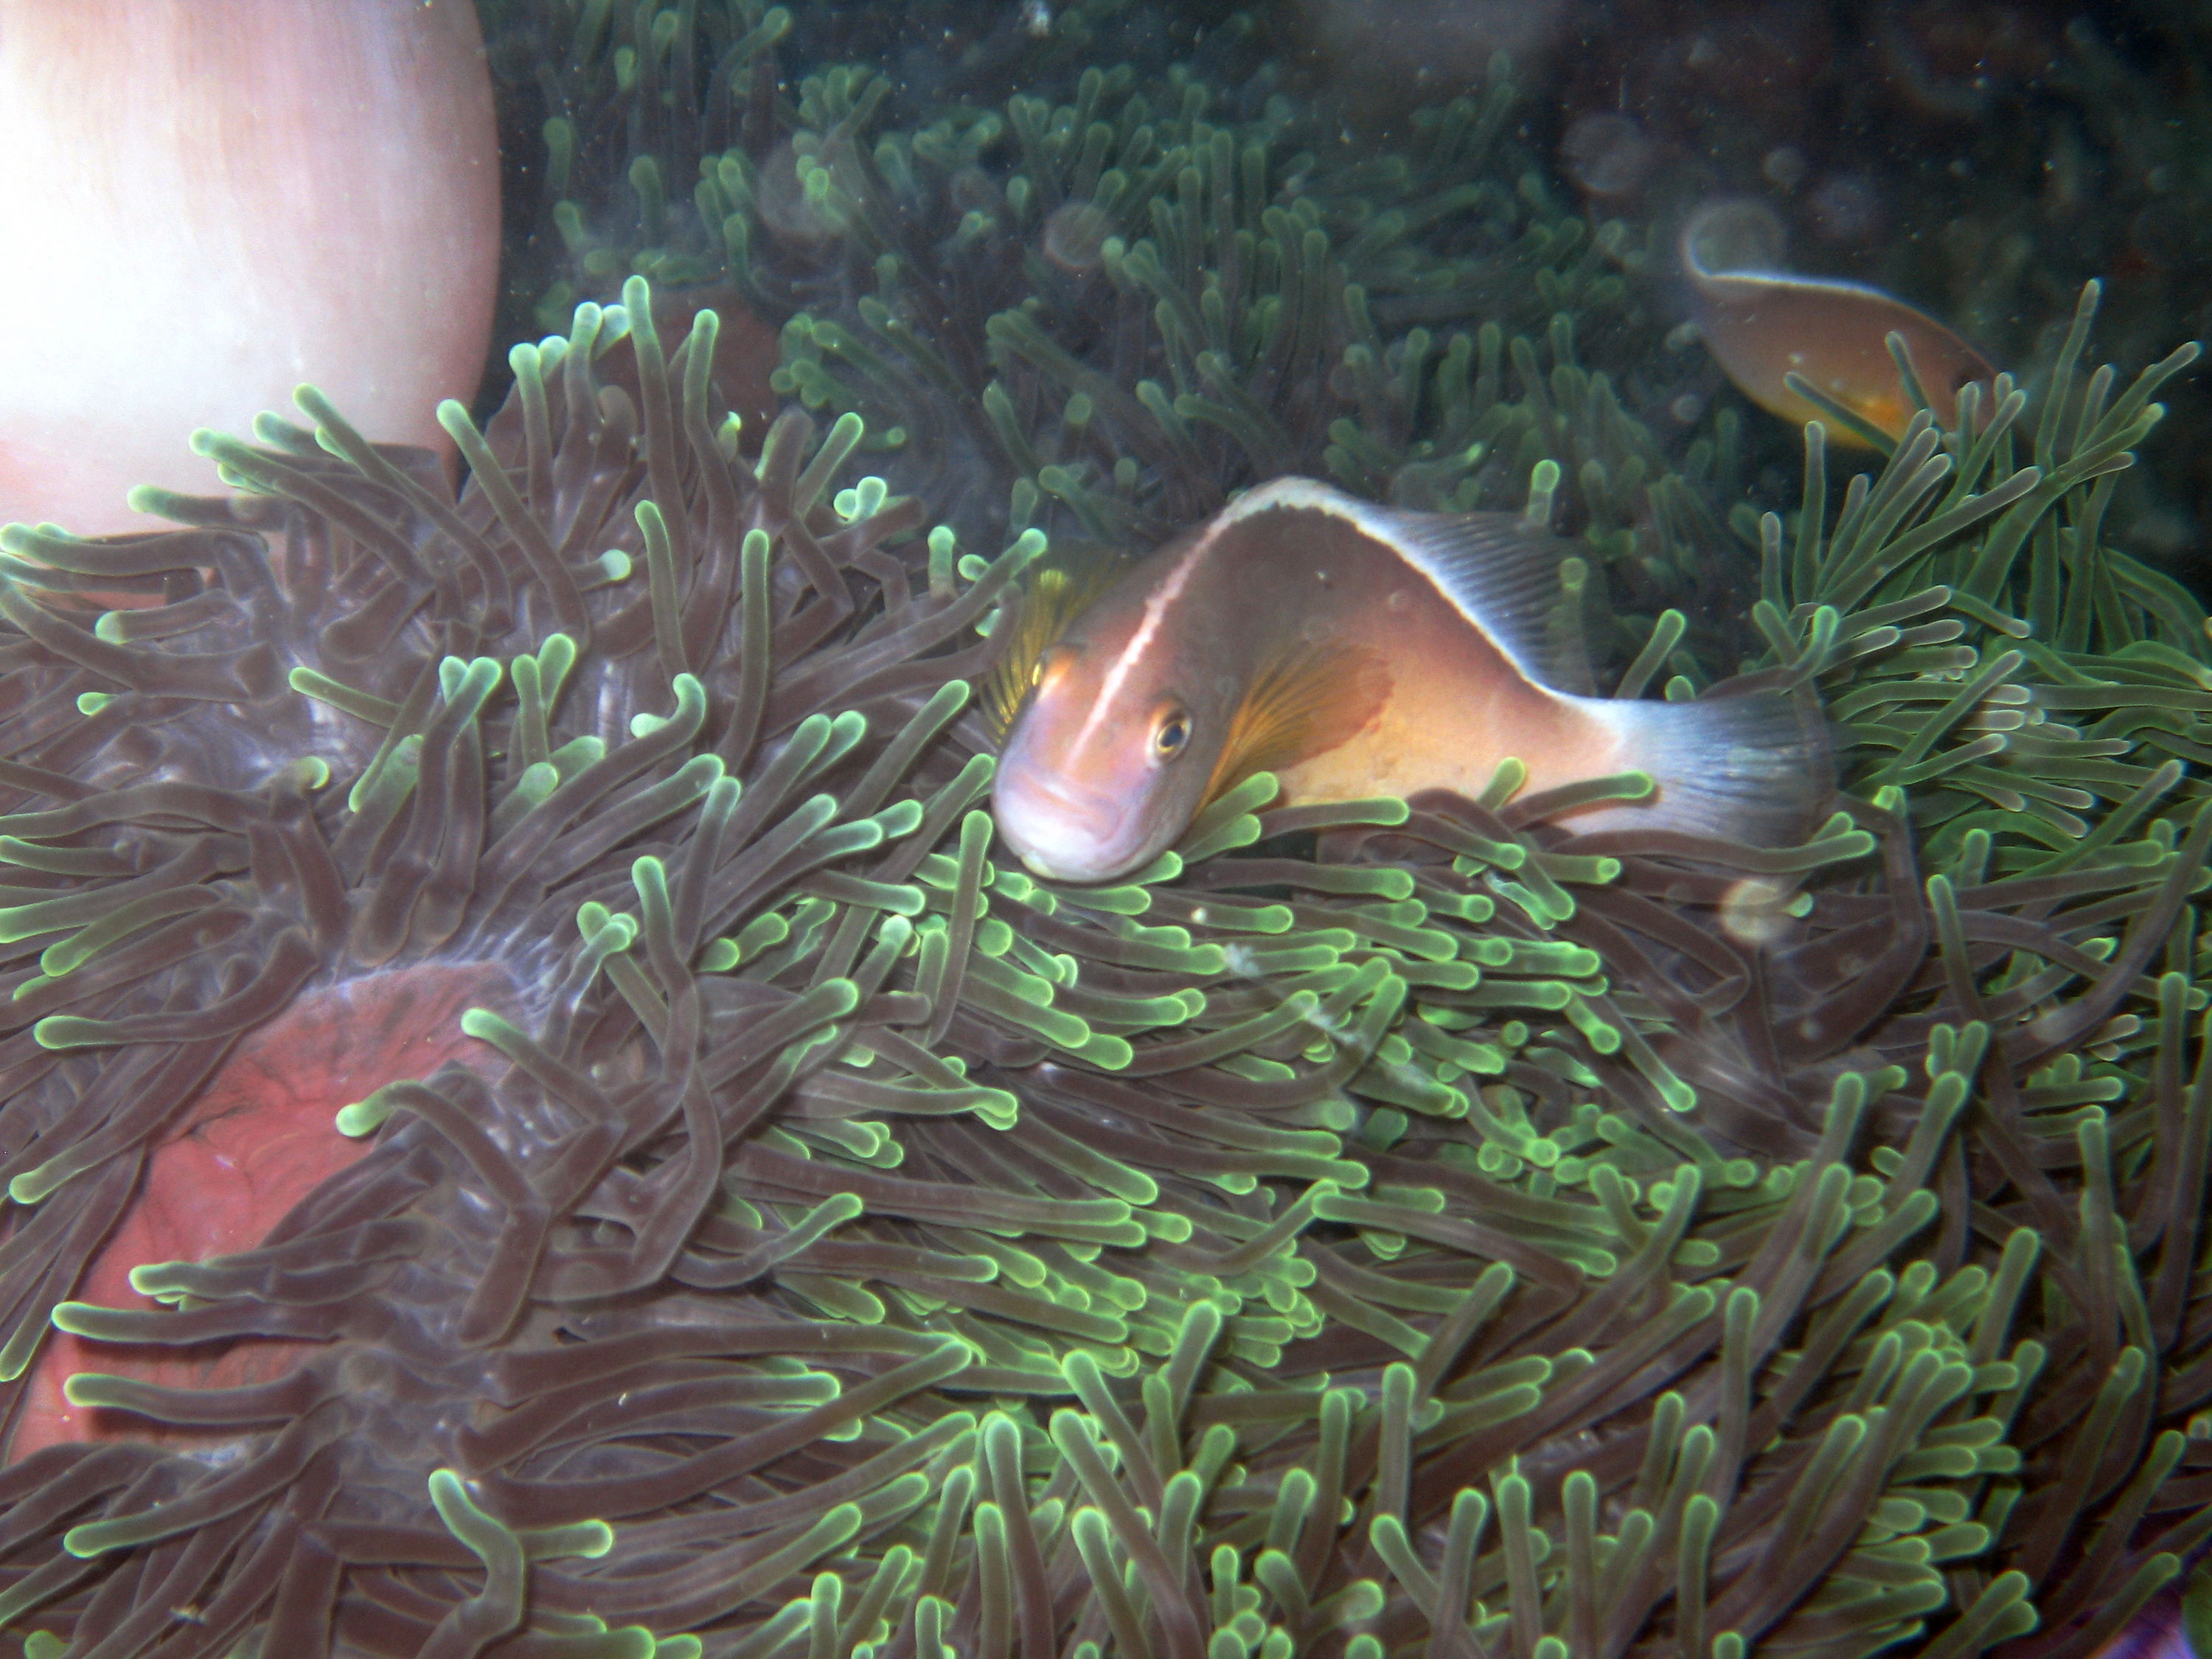 Skunk anemone fish